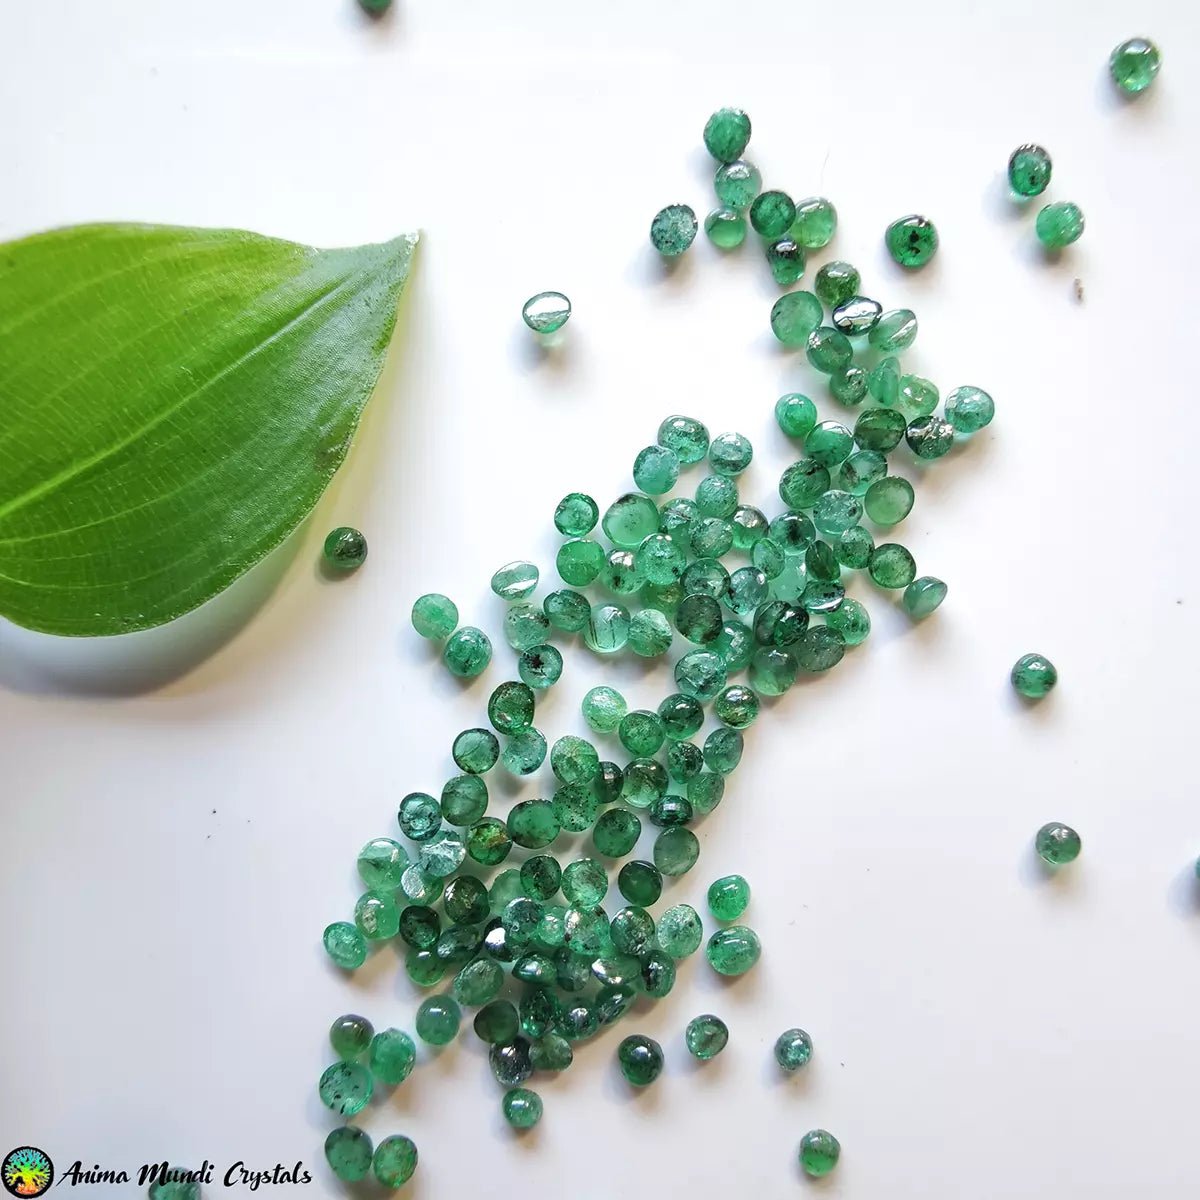 2mm Emerald Mini Cabochons - 5pcs - Anima Mundi Crystals